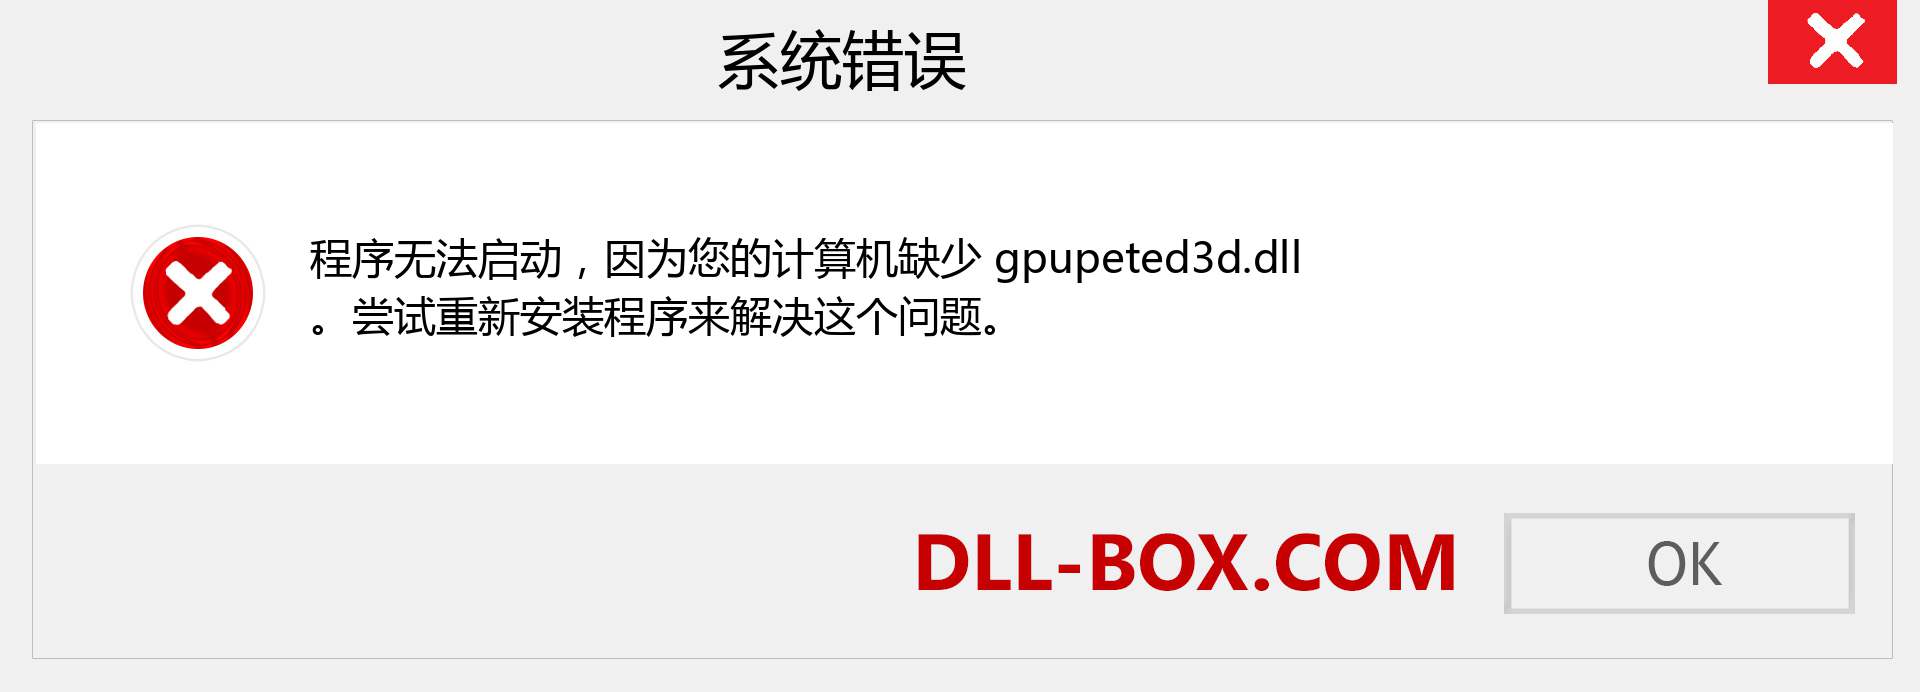 gpupeted3d.dll 文件丢失？。 适用于 Windows 7、8、10 的下载 - 修复 Windows、照片、图像上的 gpupeted3d dll 丢失错误